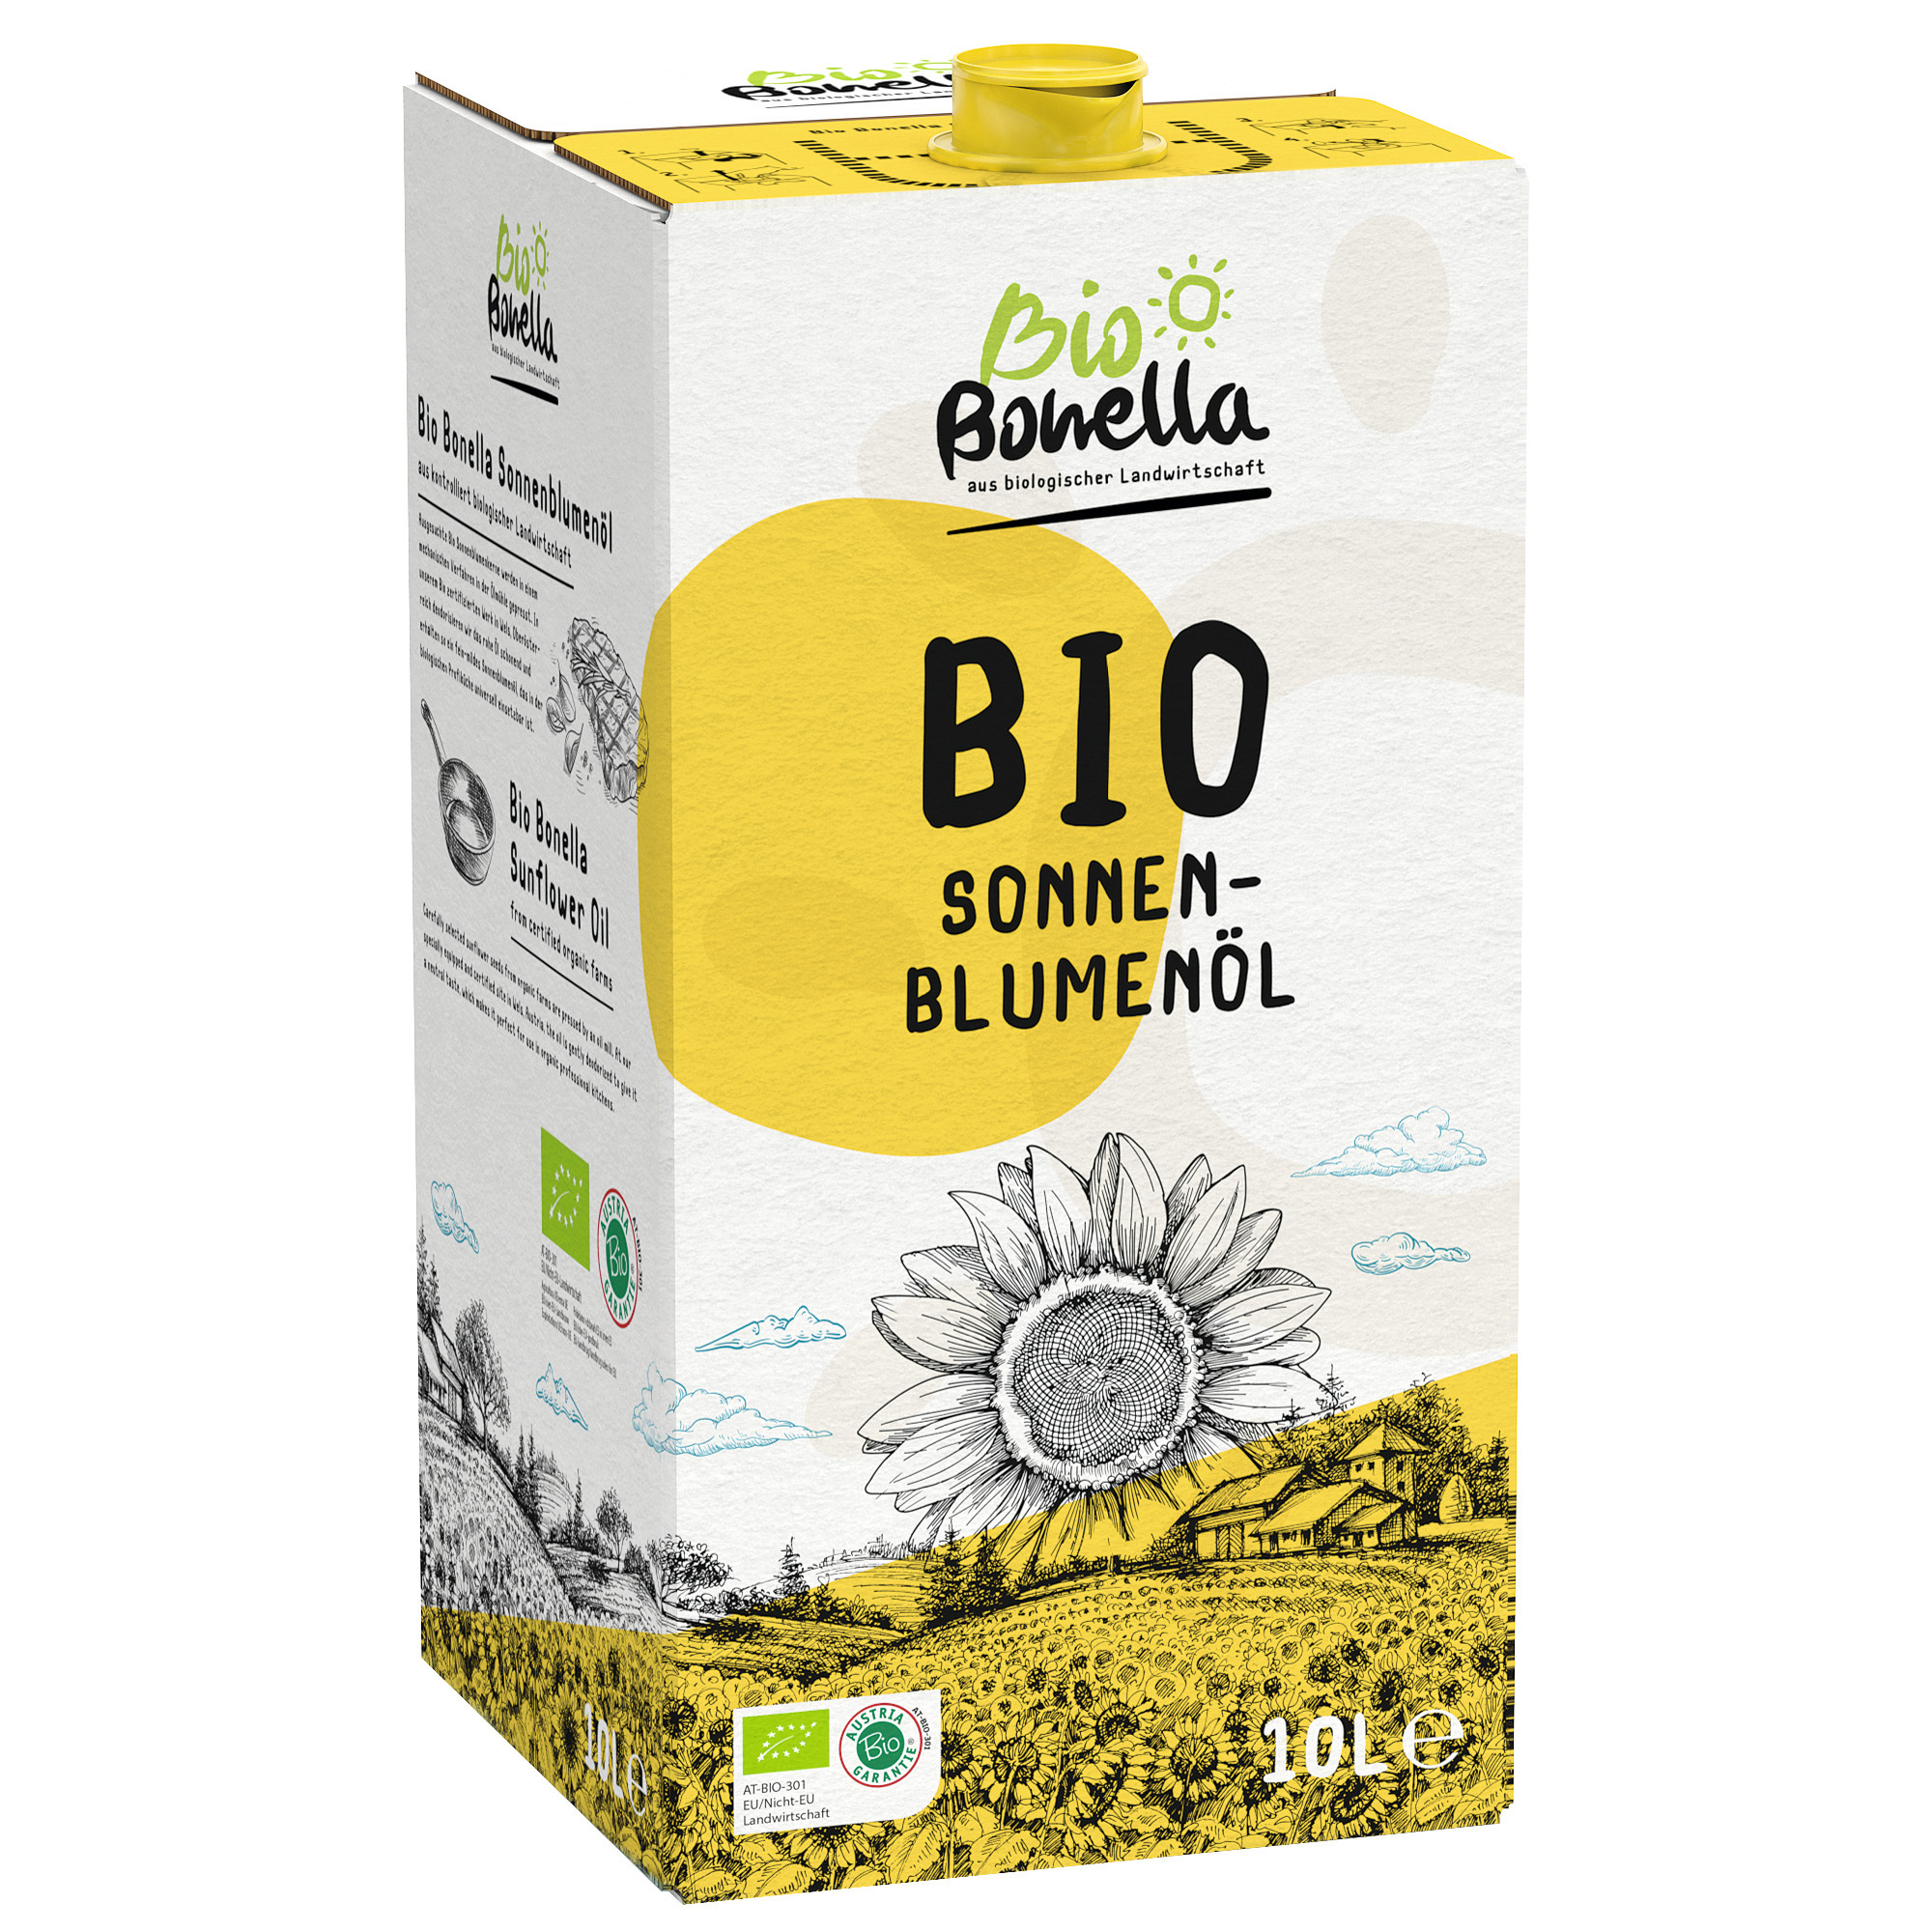 Bonella Bio slnečnicový olej 10L